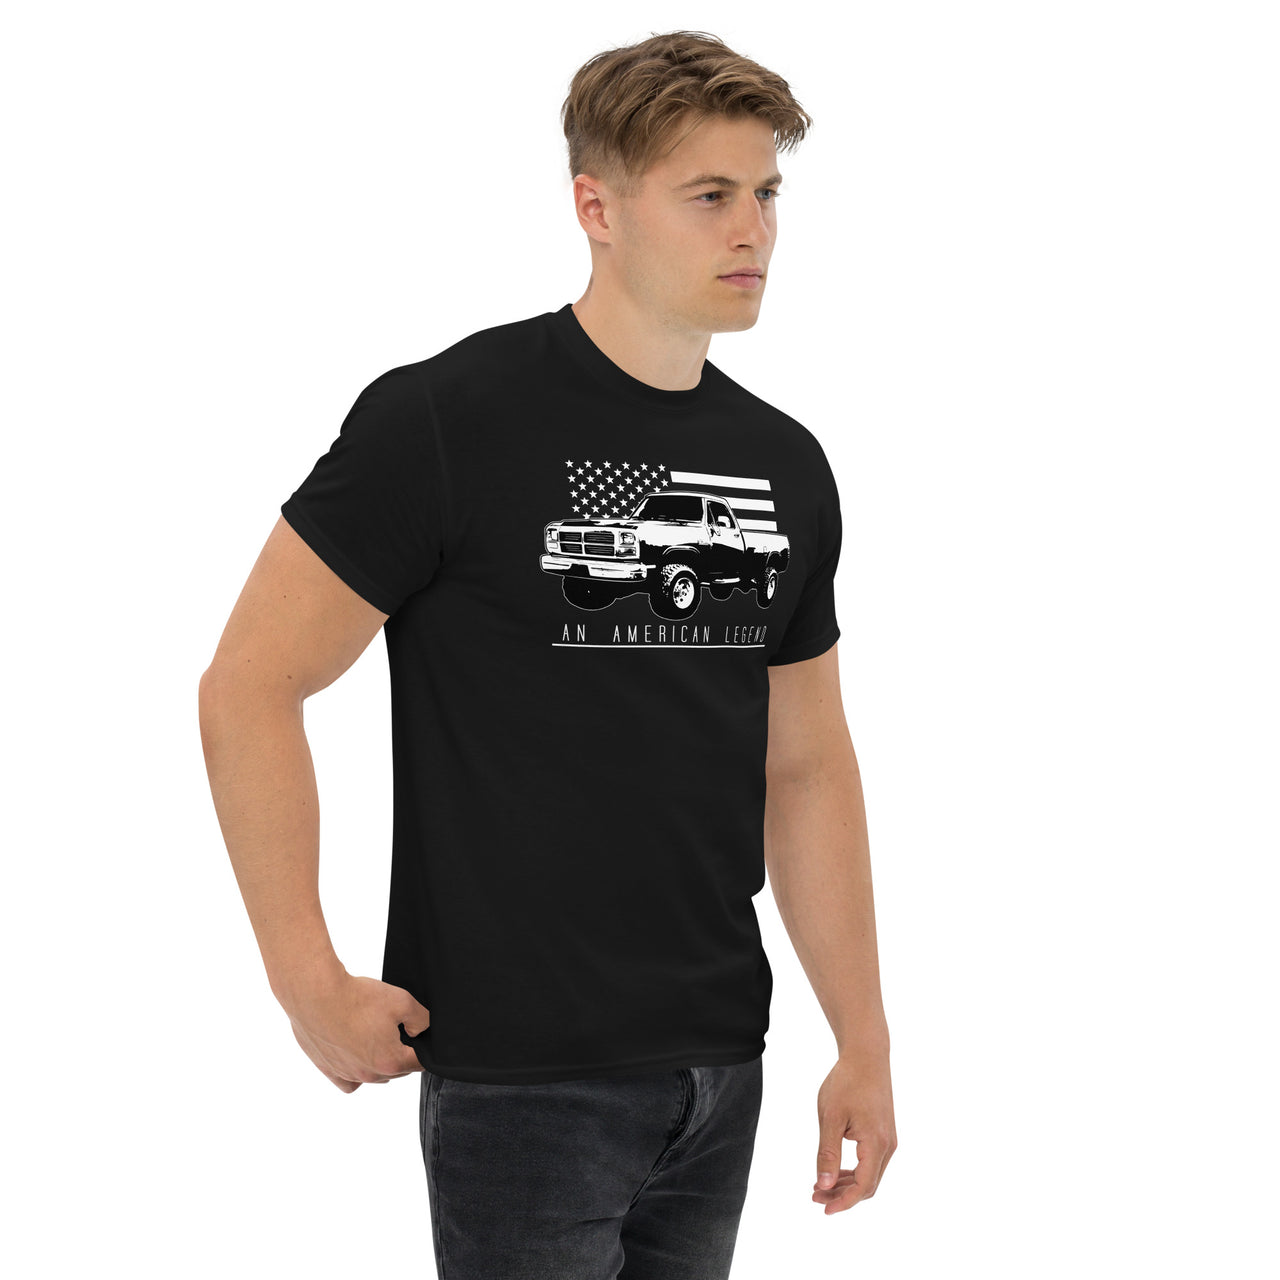 First Gen Truck T-Shirt modeled in black